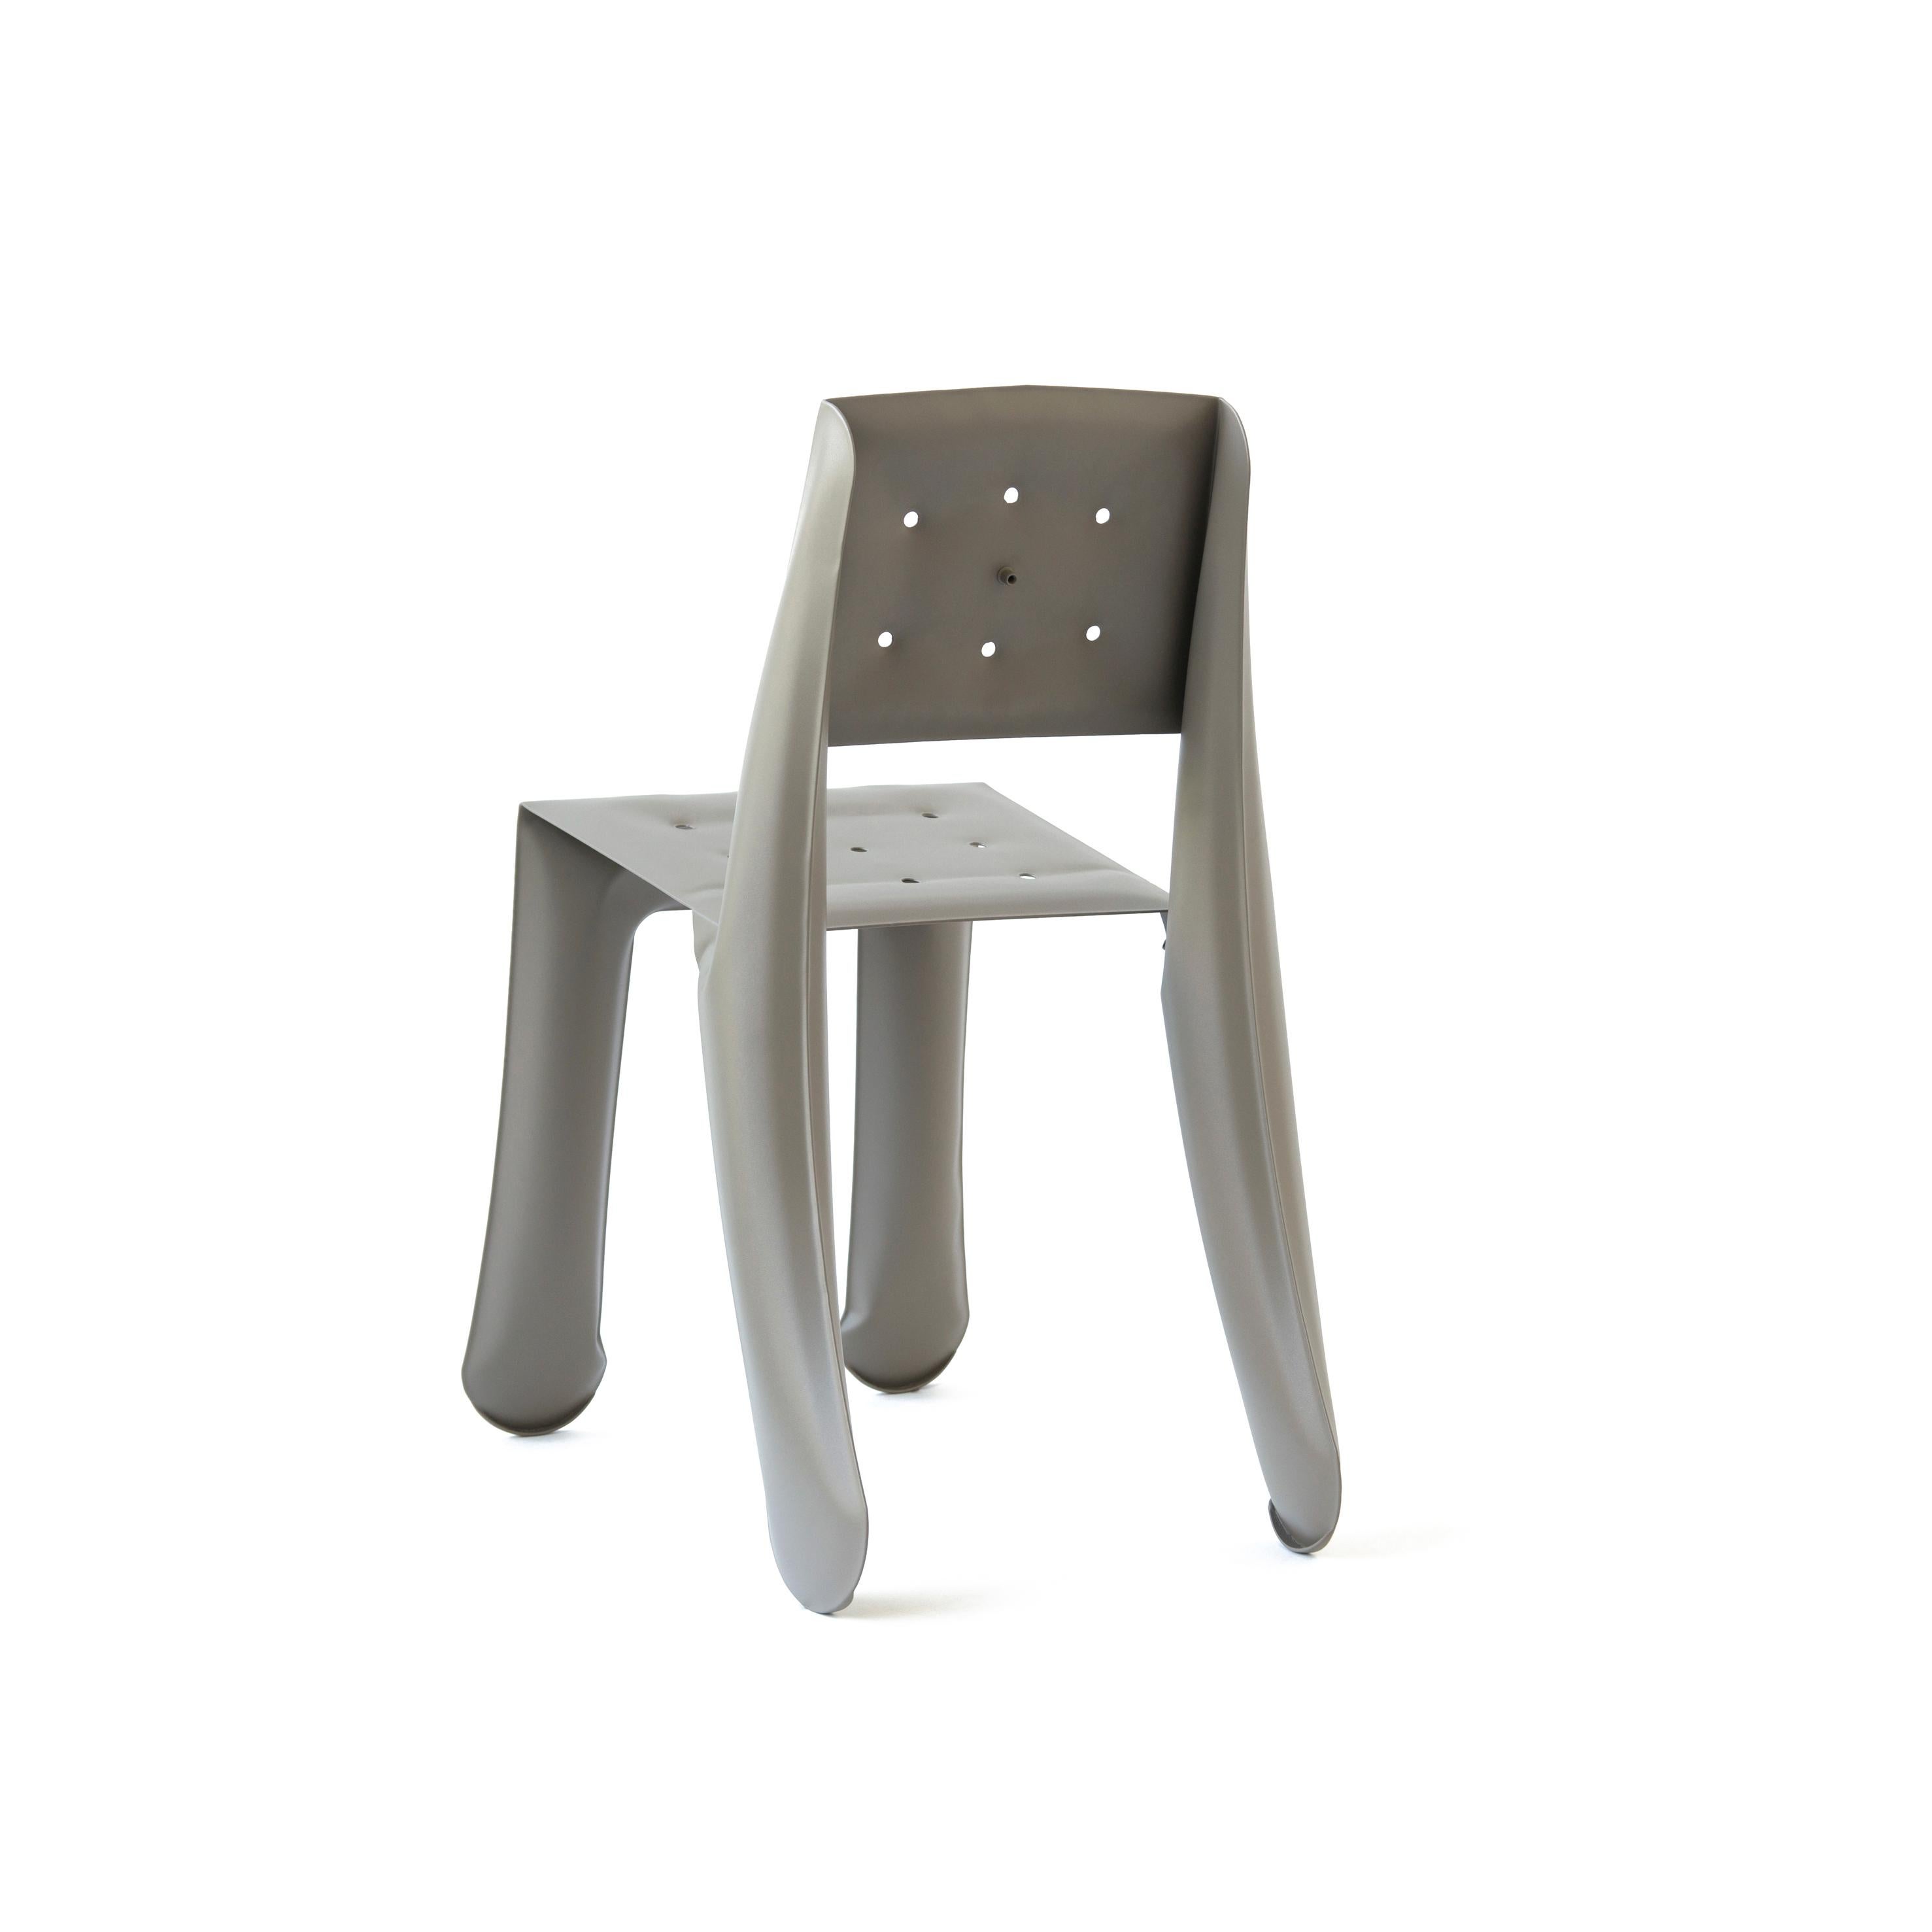 Beige Carbon Steel Chippensteel 0.5 Sculptural Chair by Zieta In New Condition For Sale In Geneve, CH